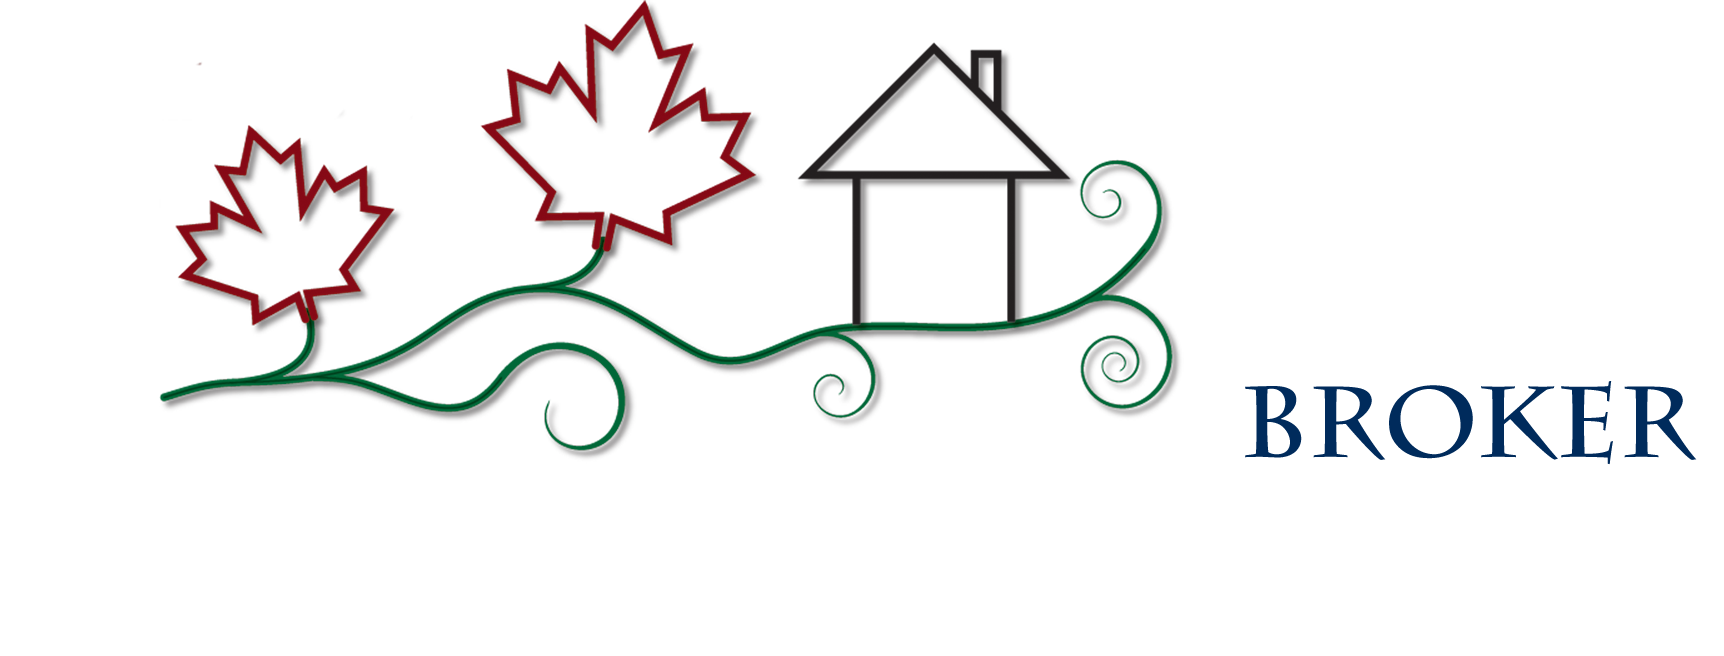 ottawa real estate agent bruce brown